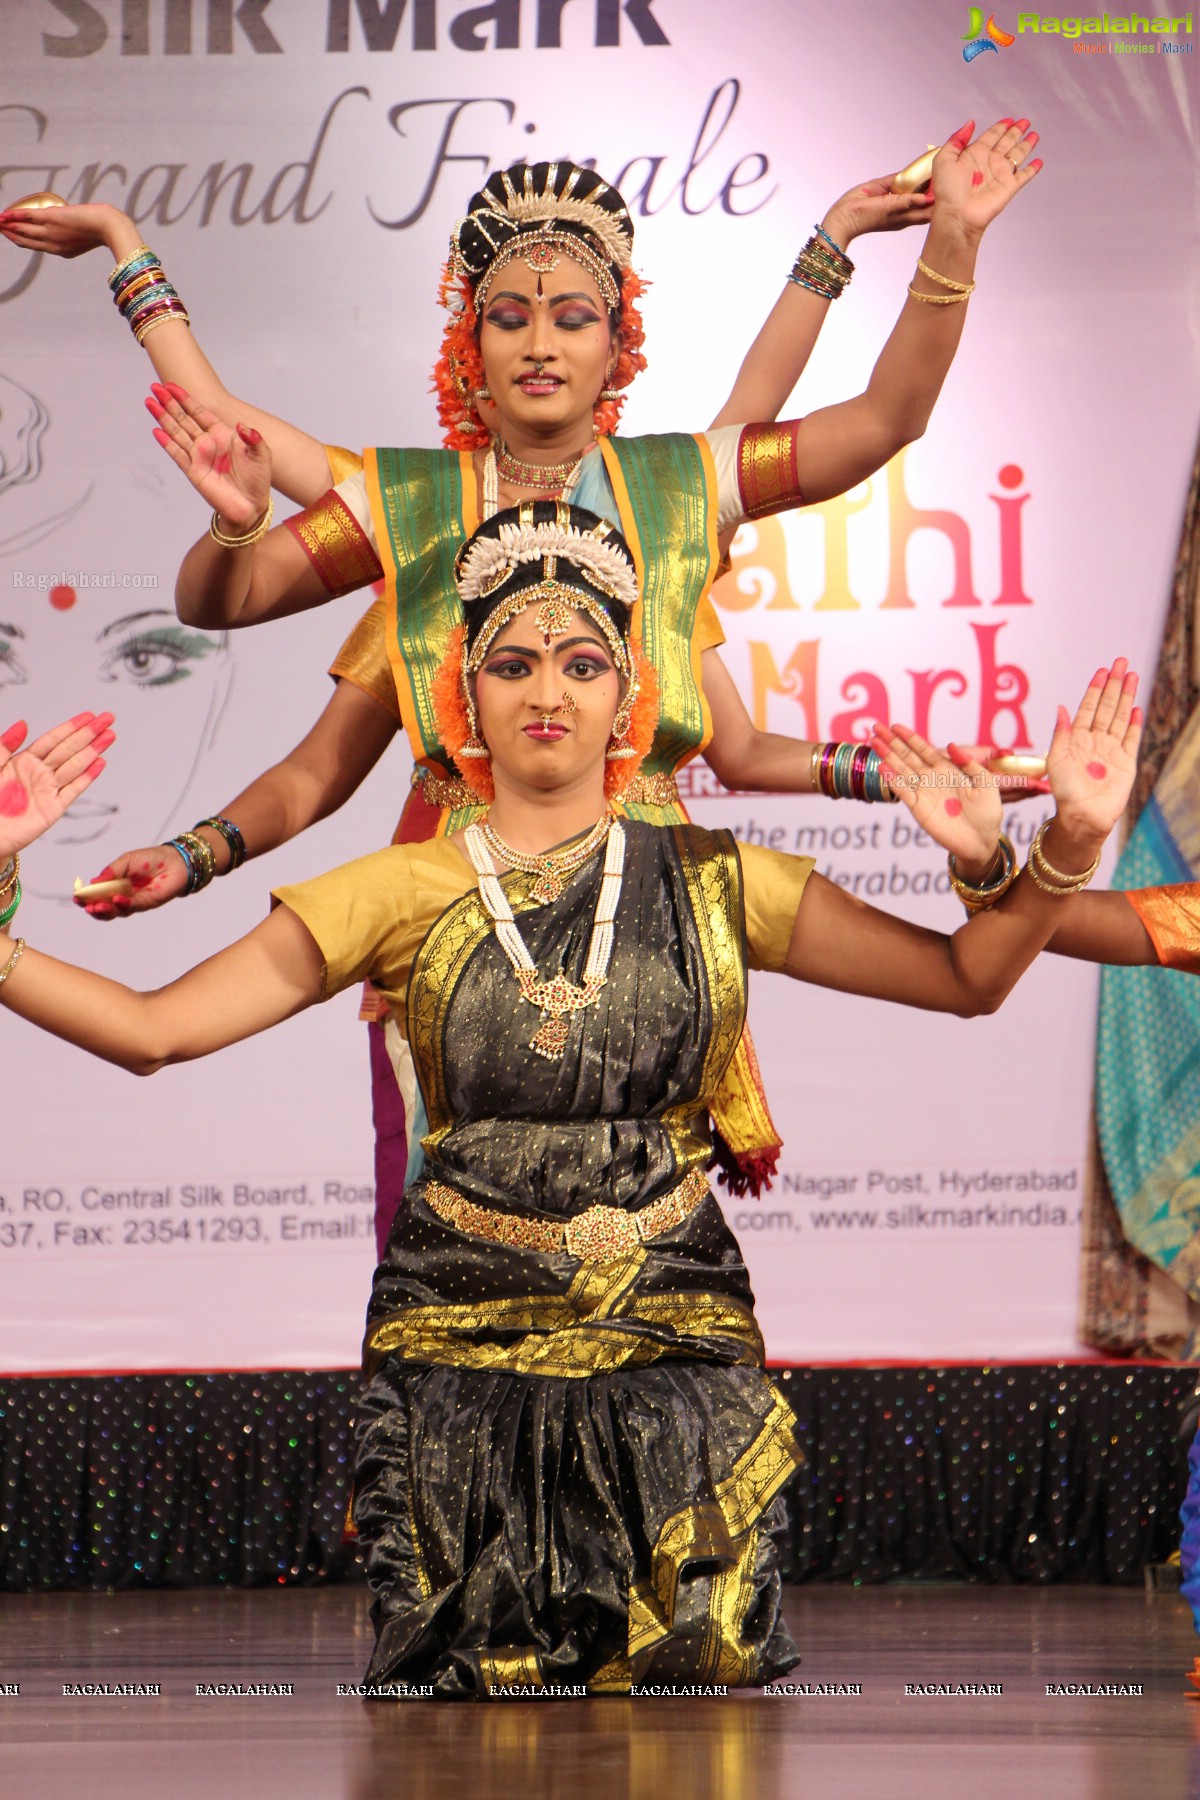 Srimathi Silk Mark 2014 Grand Finale, Hyderabad